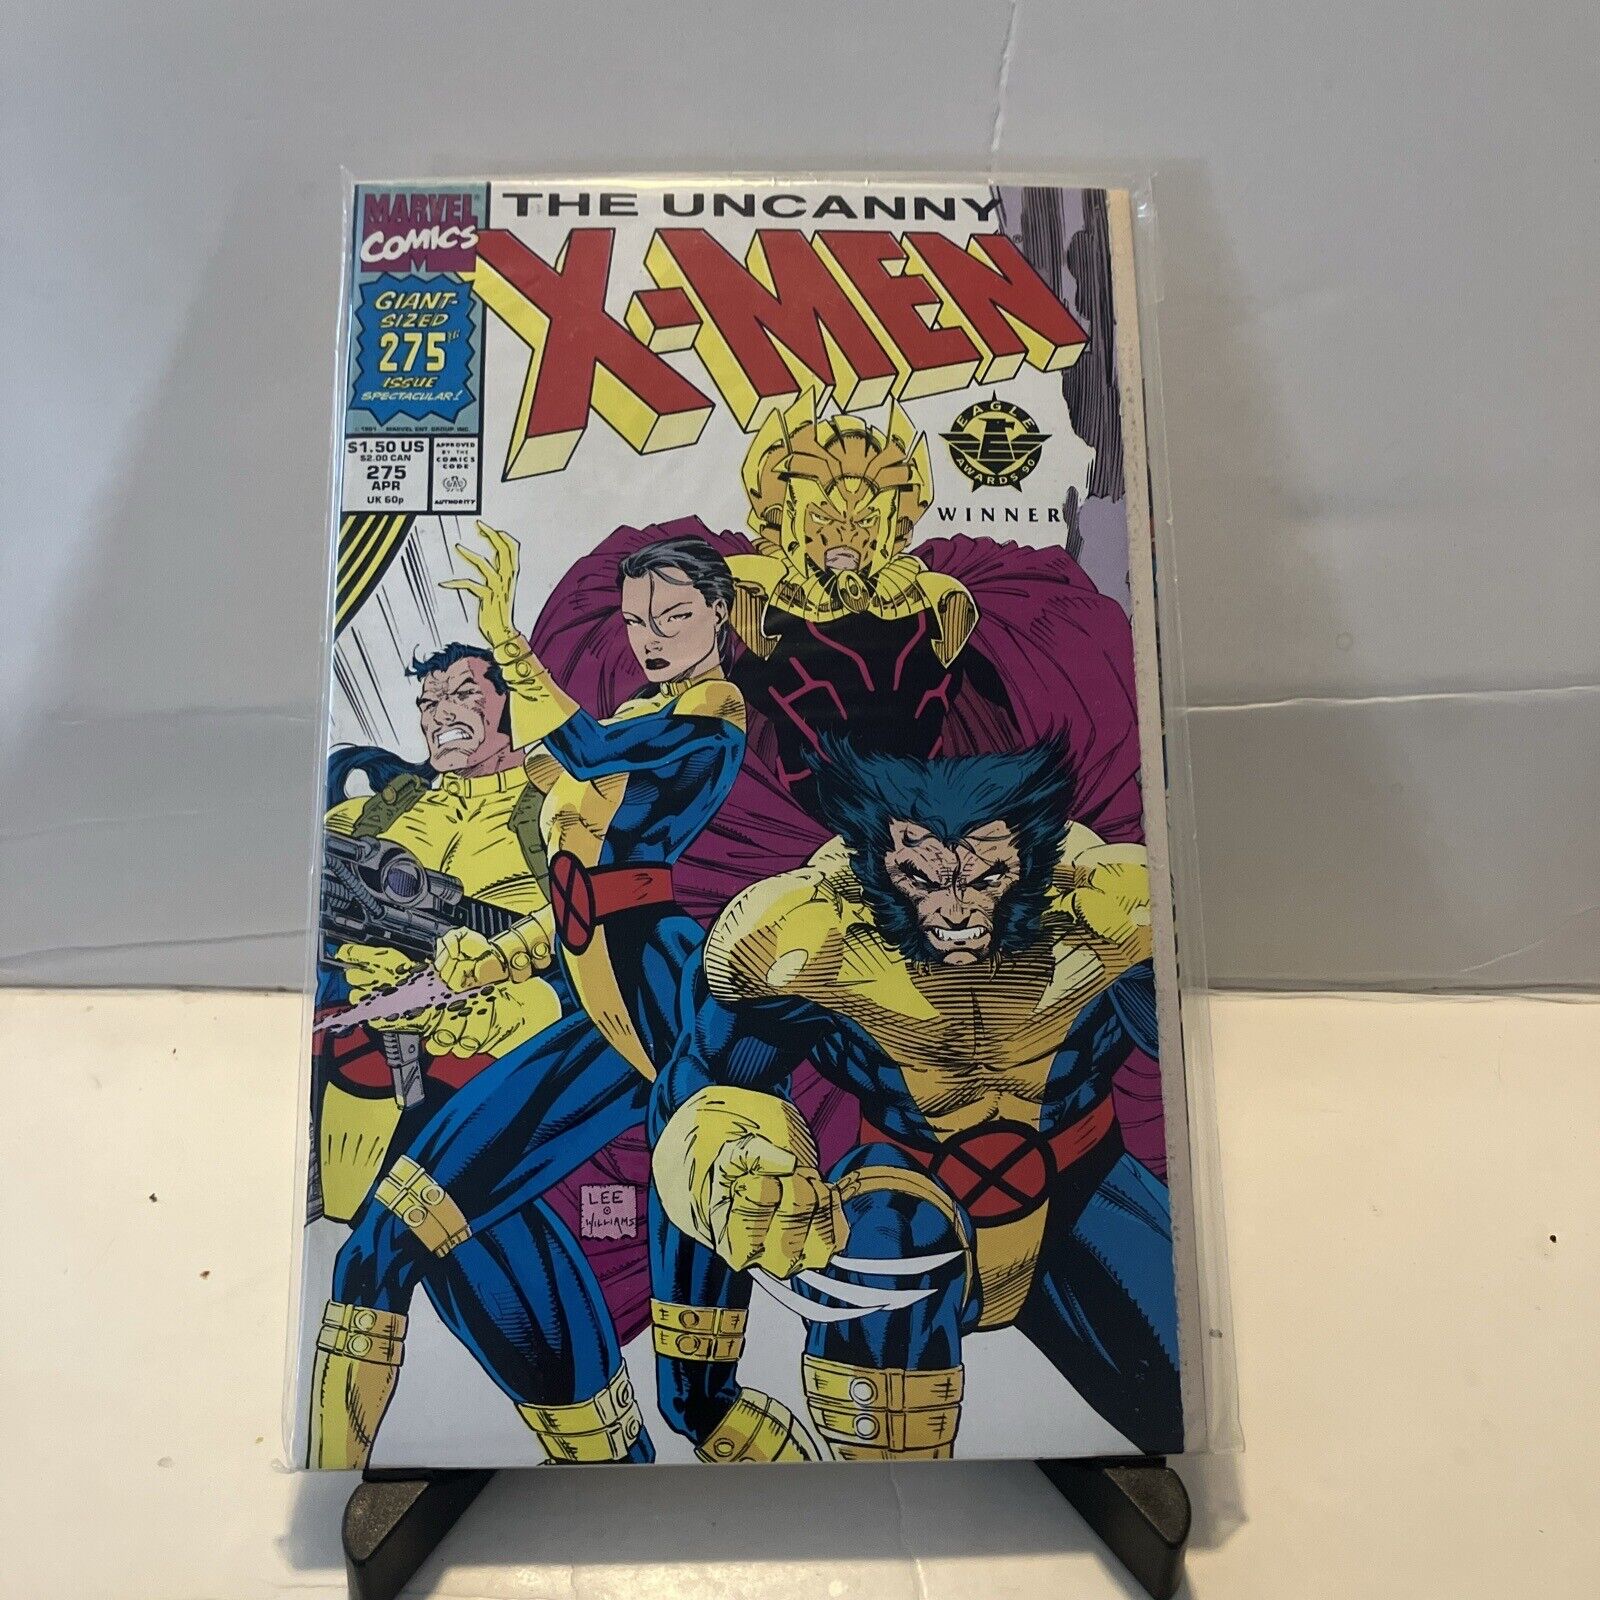 The Uncanny X-Men #275 (Marvel, April 1991)